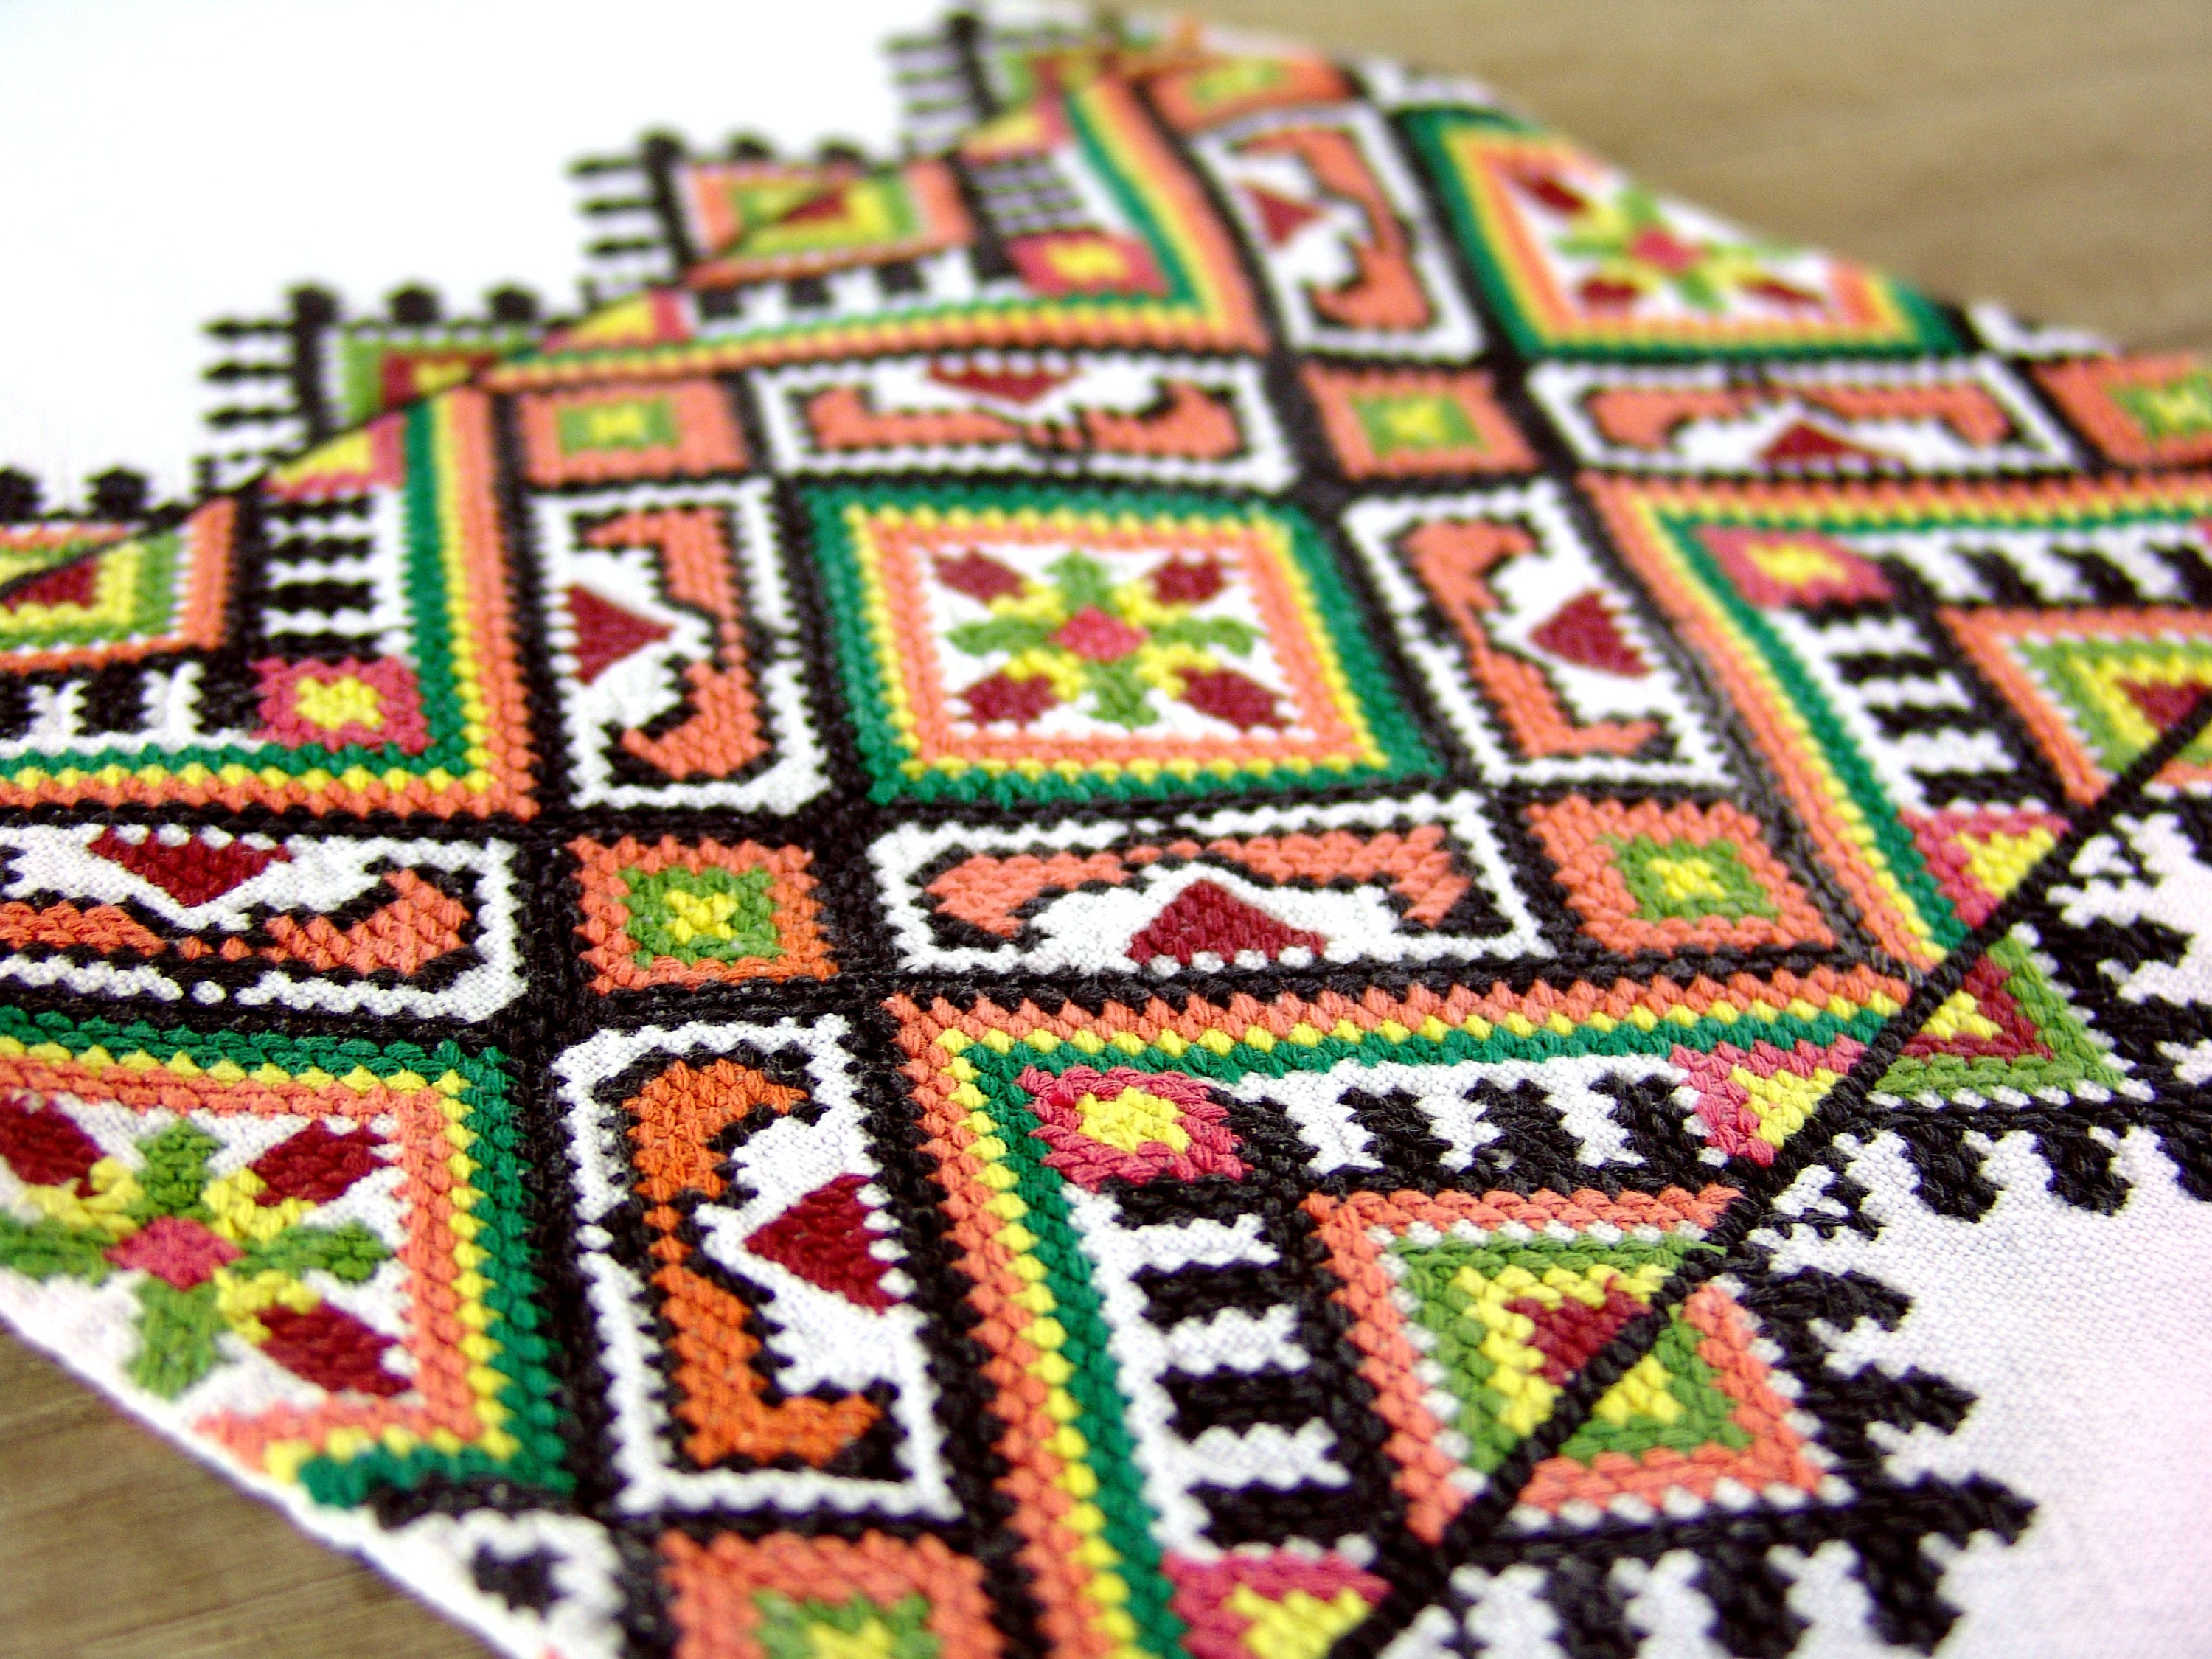 Hand embroidered small Ukrainian decor Ukrainian embroidery | Etsy